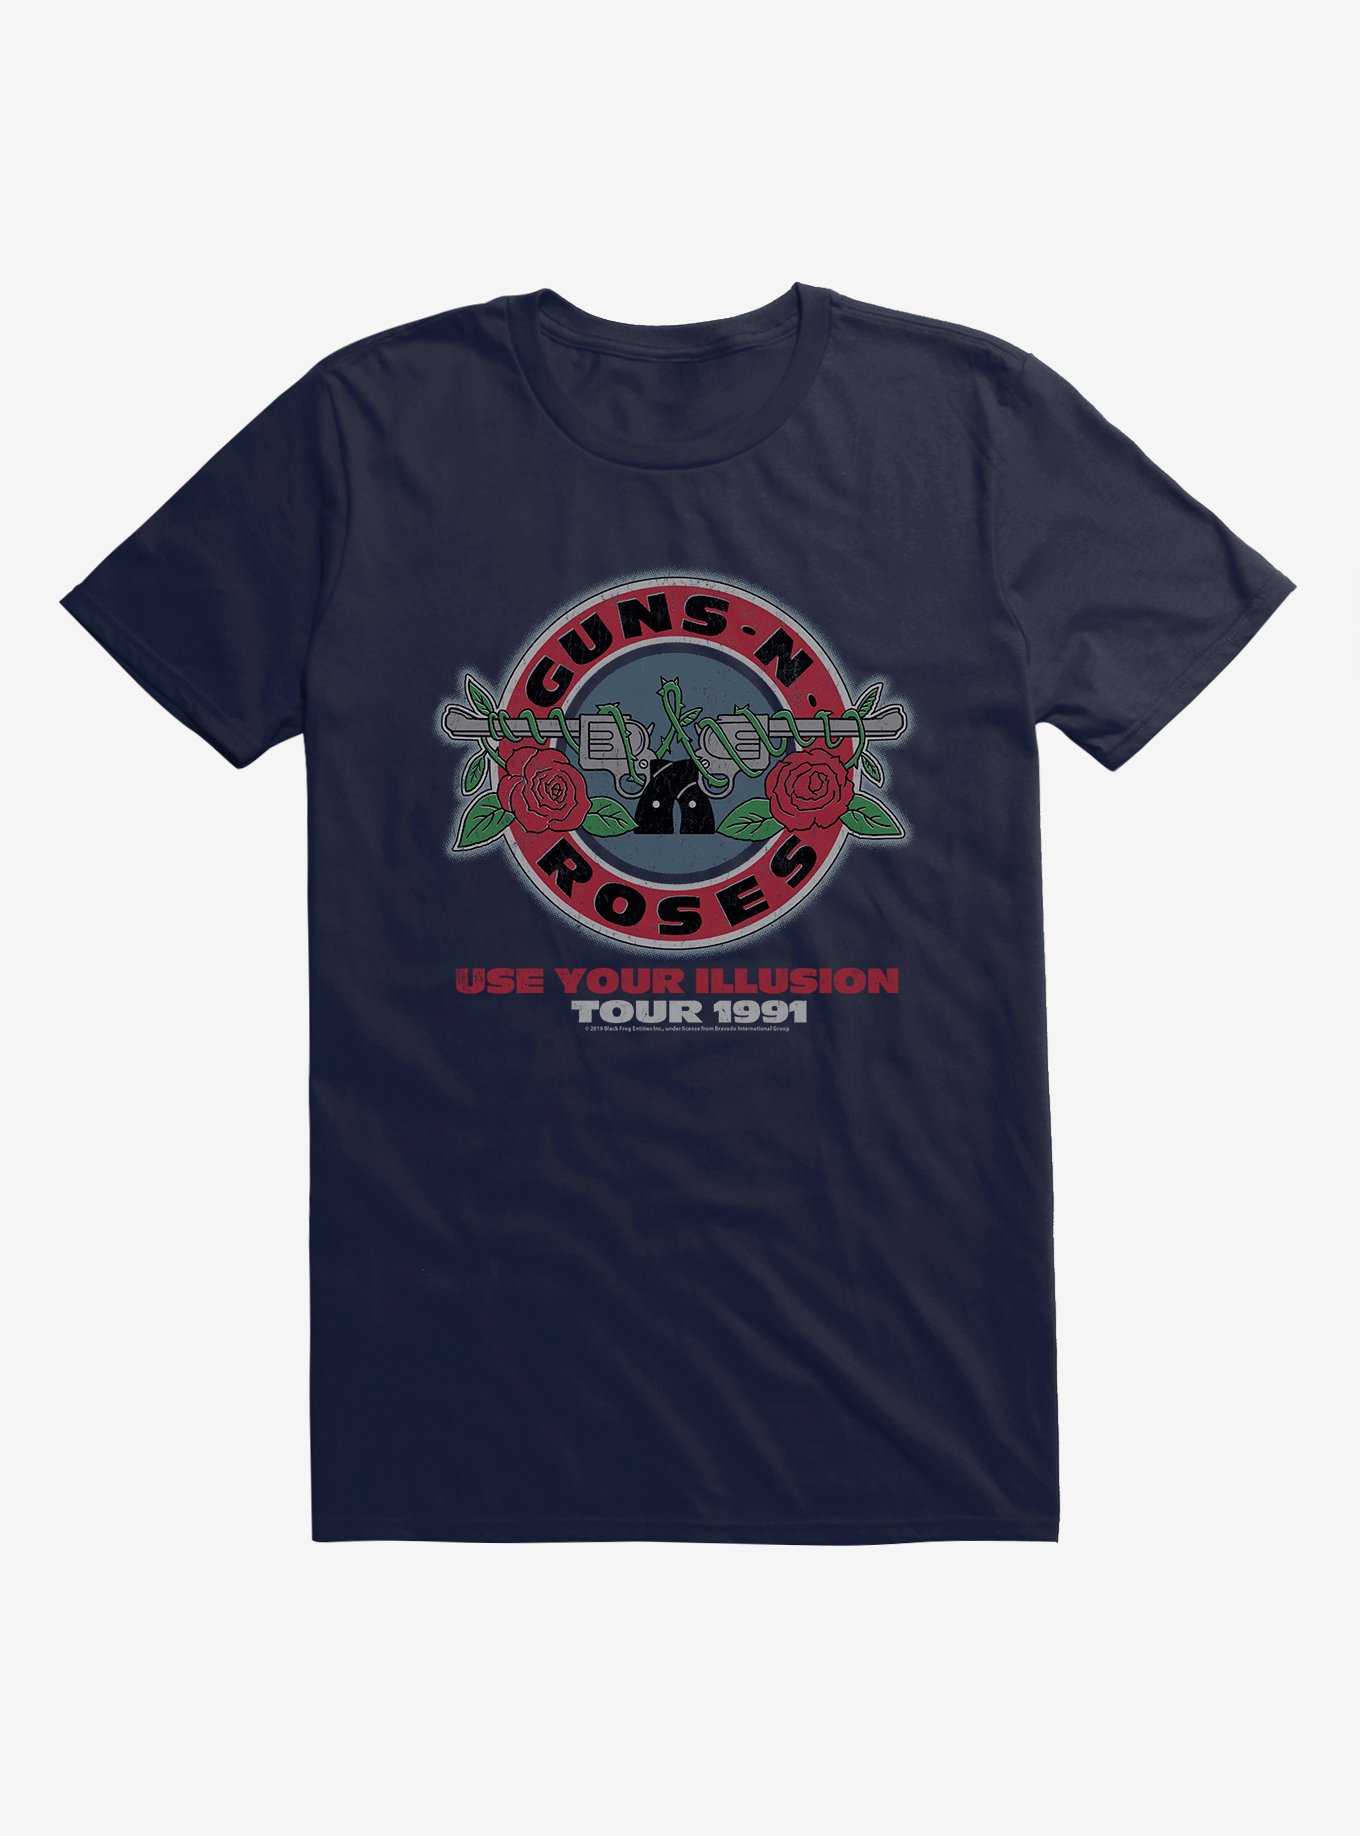 Guns N' Roses Use Your Illusion Tour 1991 T-Shirt | Hot Topic